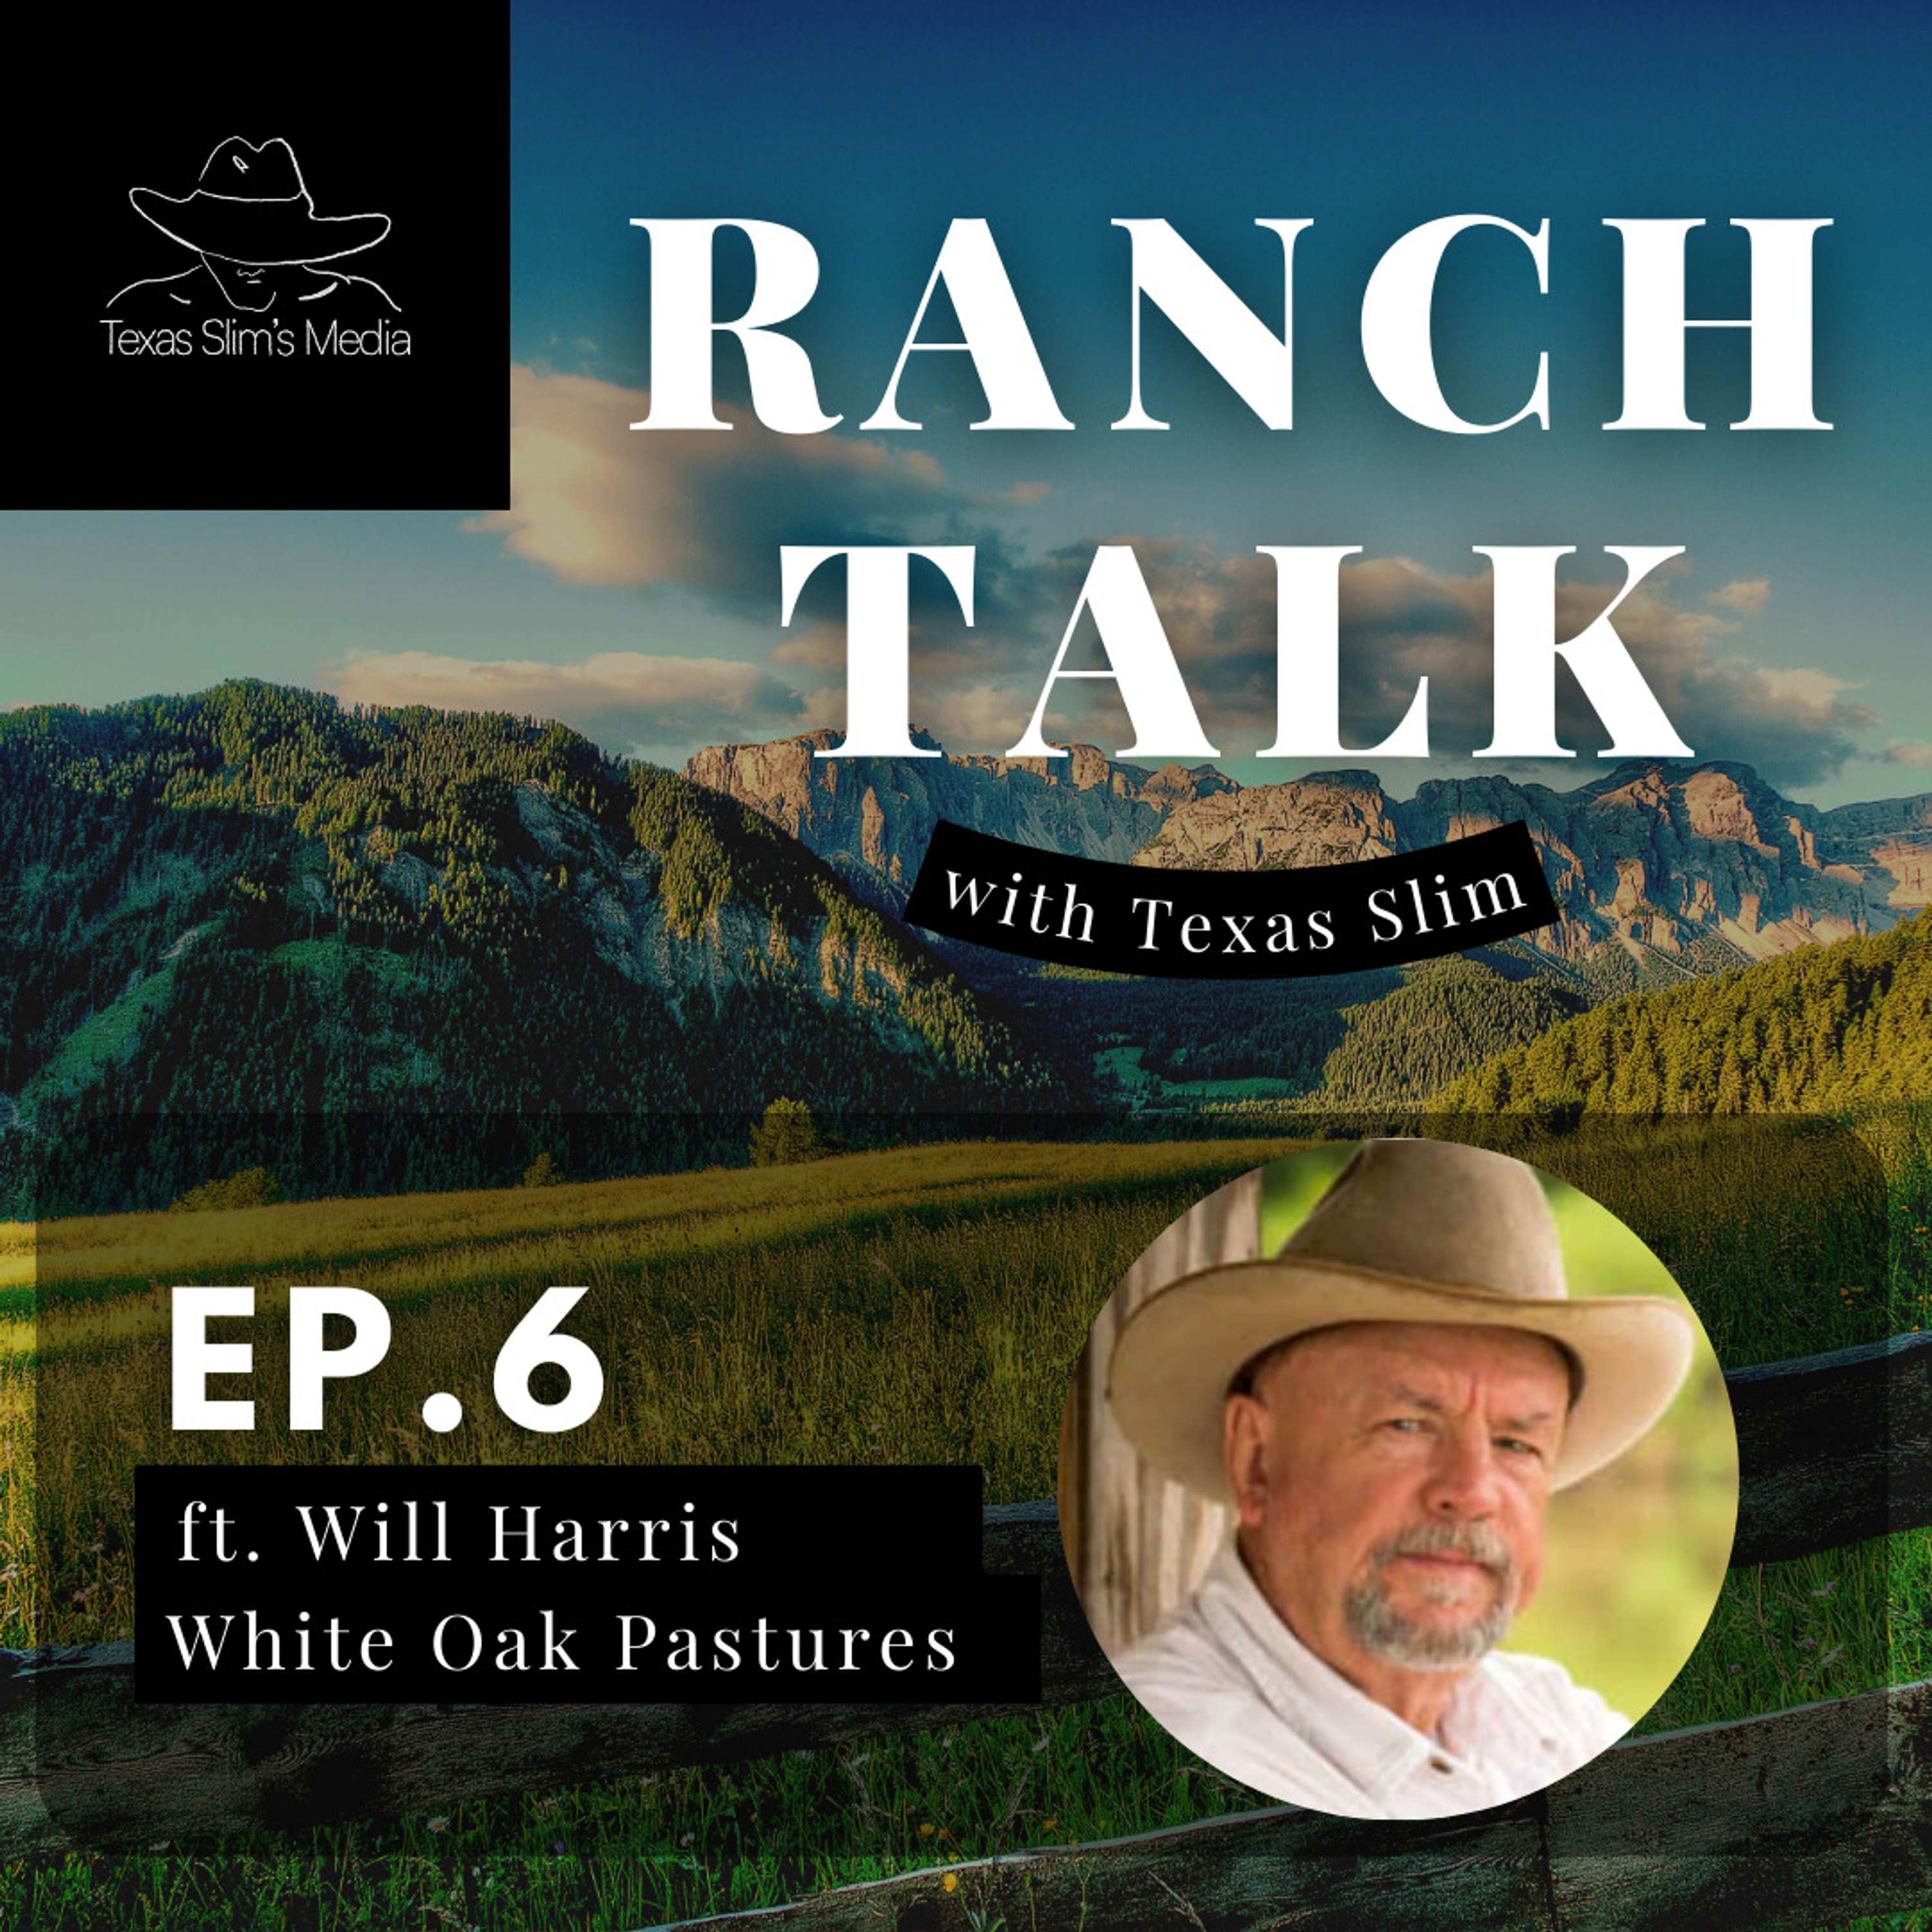 Episode 6 - Ranch Talk featuring Mr Will Harris 